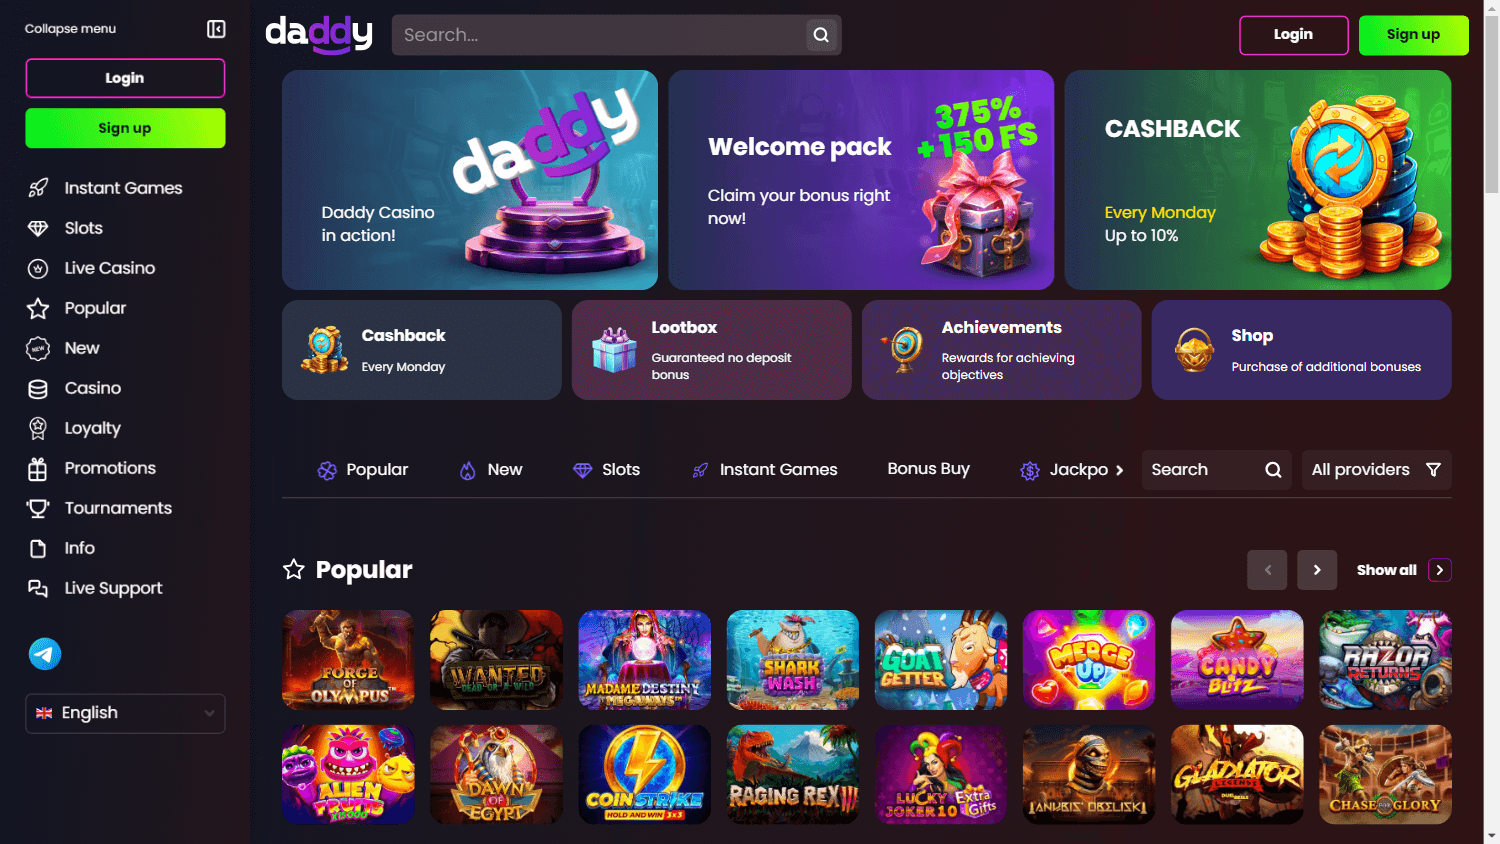 daddy_casino_homepage_desktop